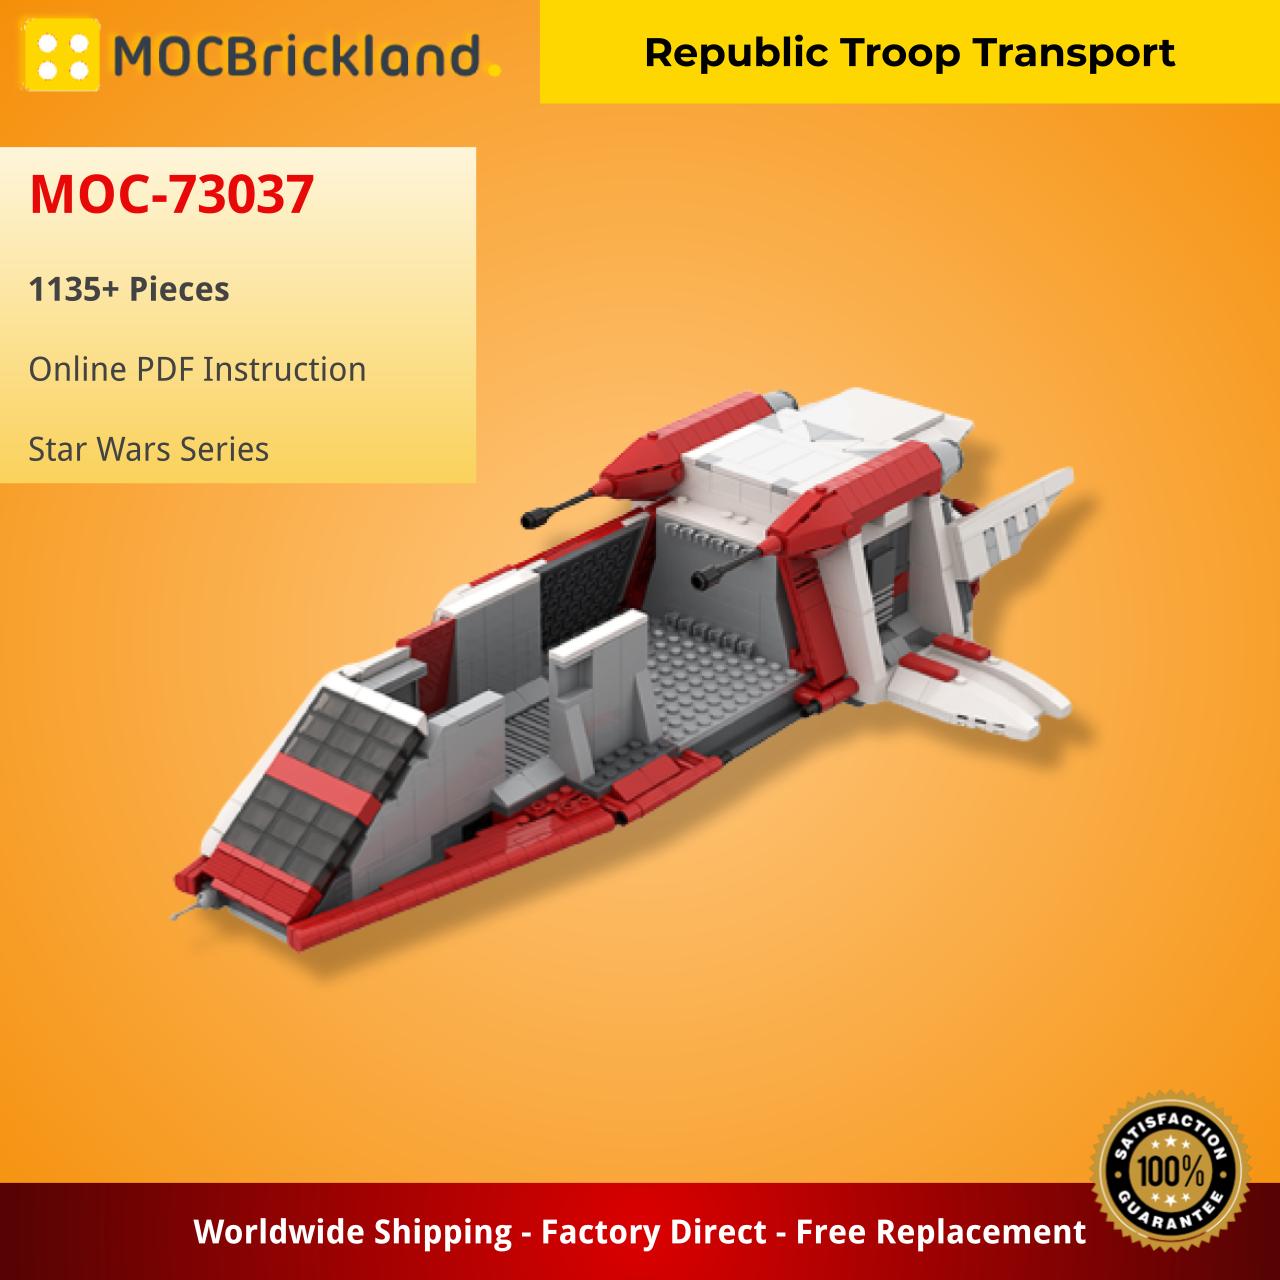 MOCBRICKLAND MOC-73037 Republic Troop Transport